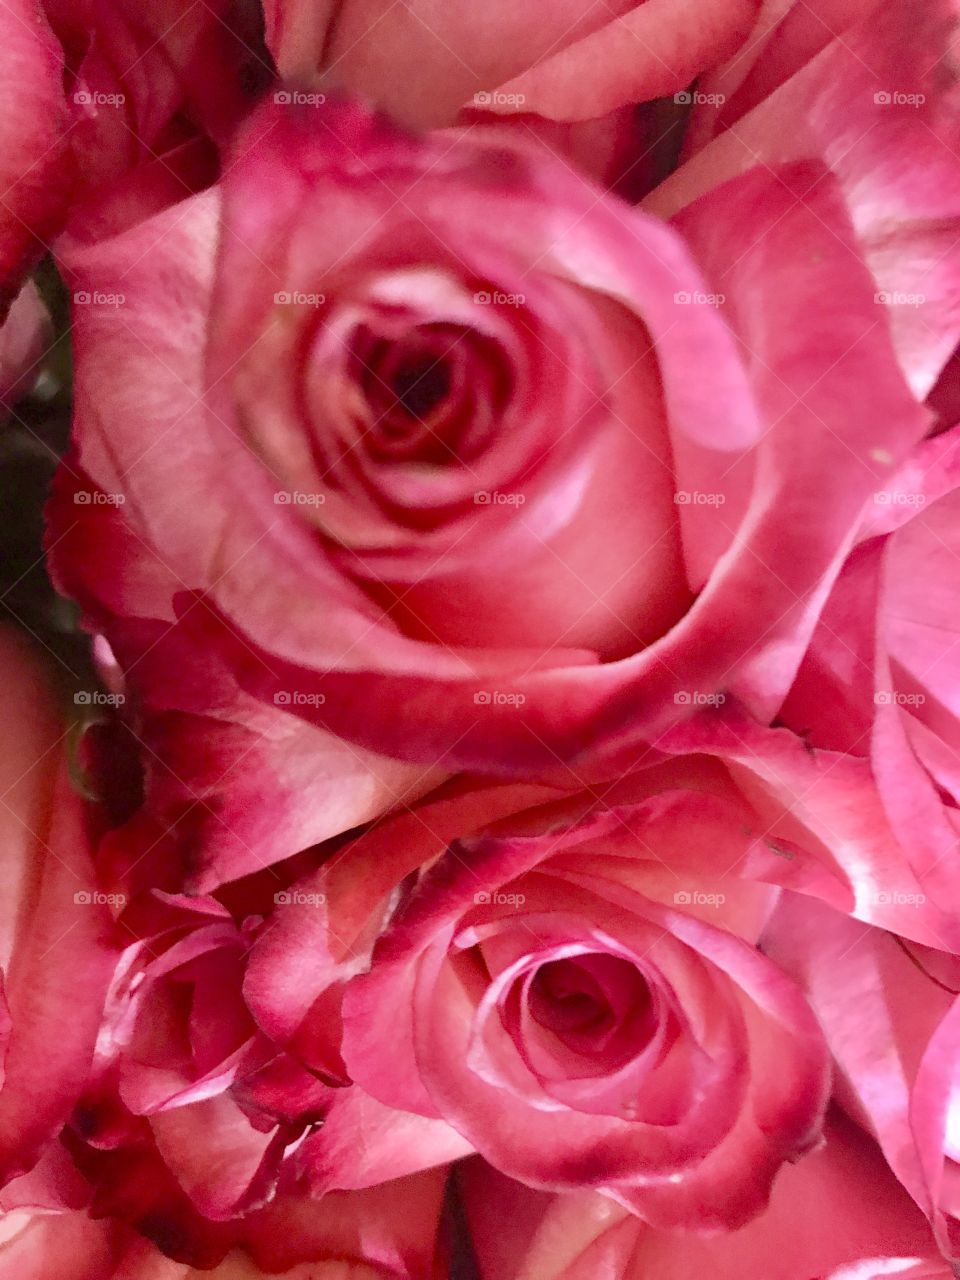 Pink roses upclose